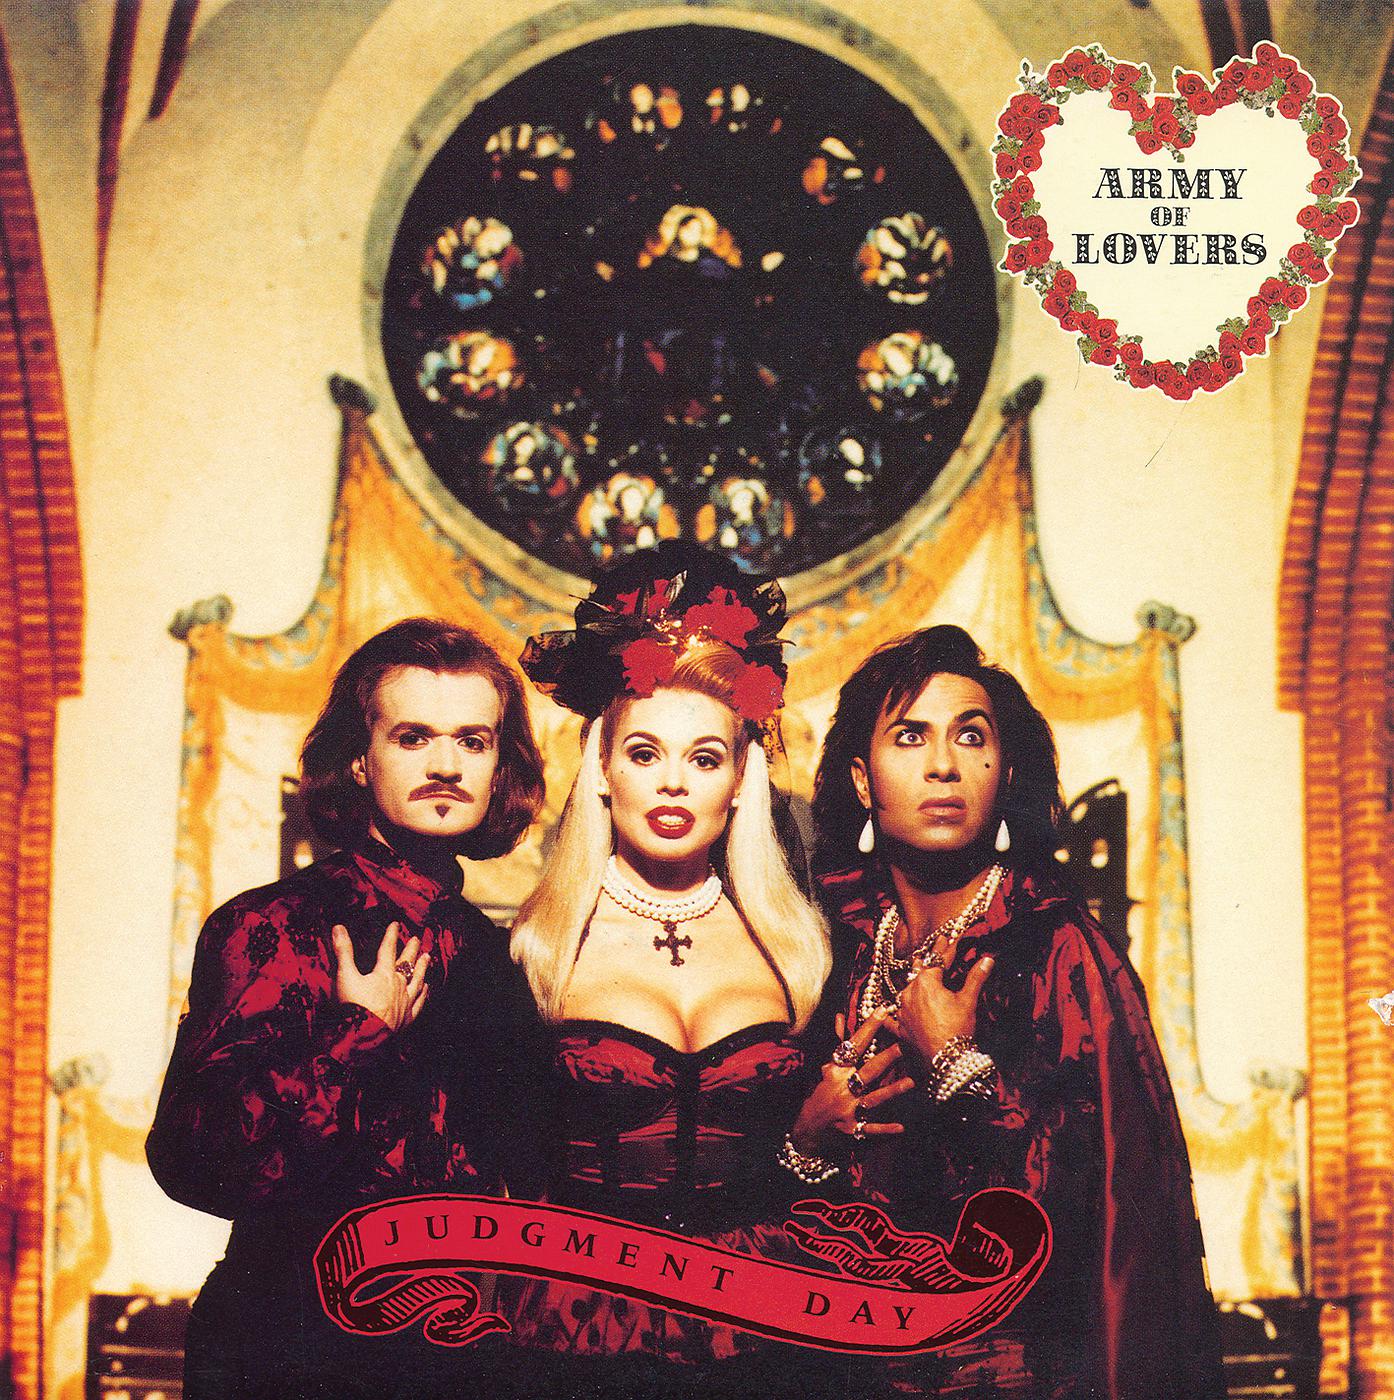 Группа Army of lovers. Army of lovers 1994 обложка. Army of lovers плакат 1992.